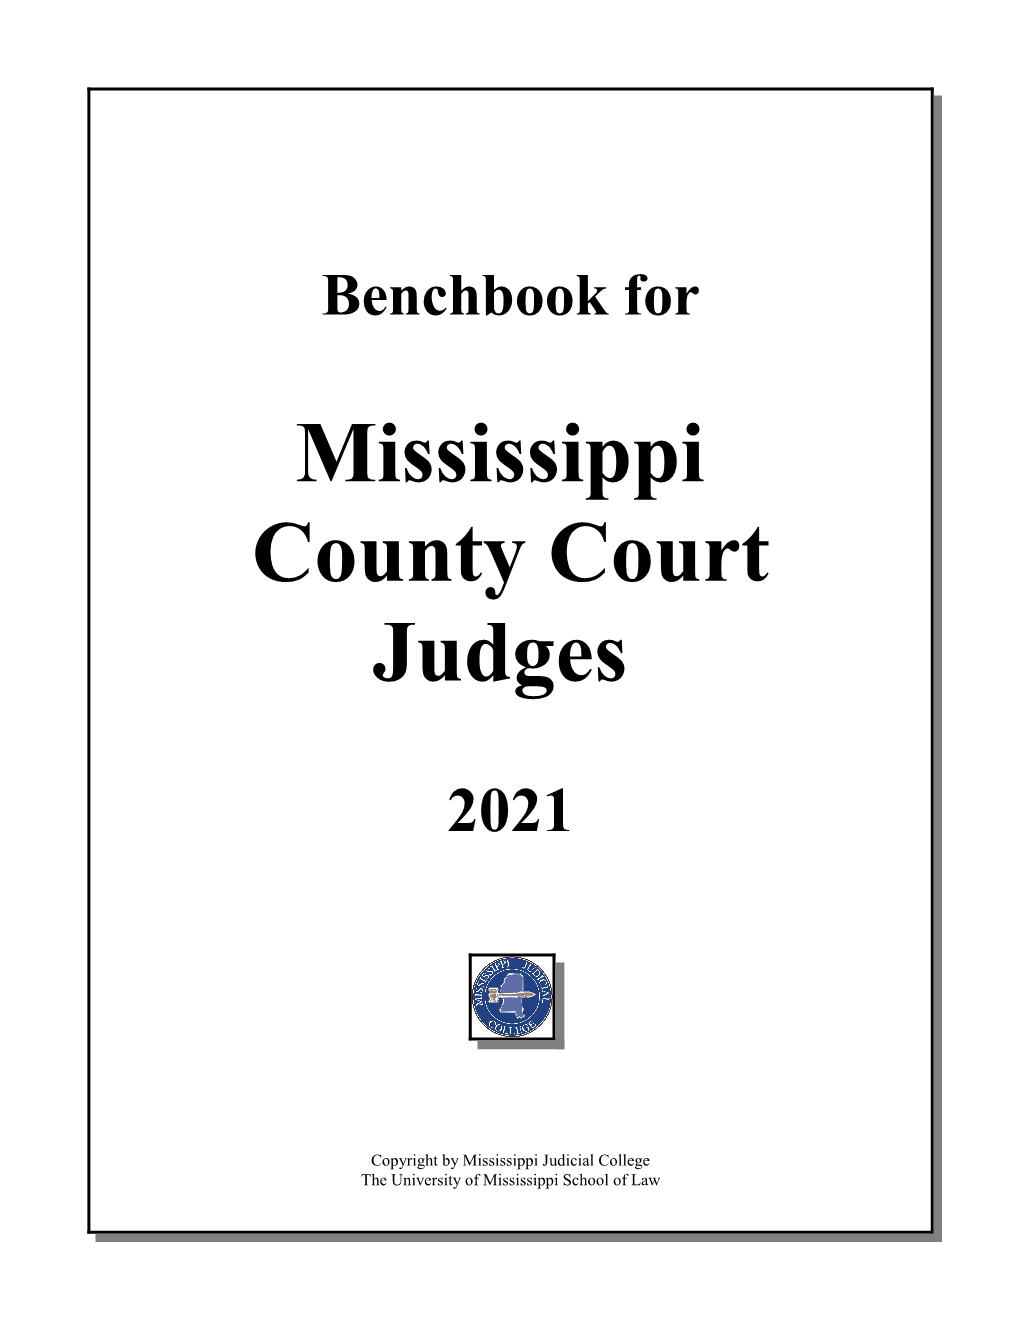 Benchbook for Mississippi County Court Judges